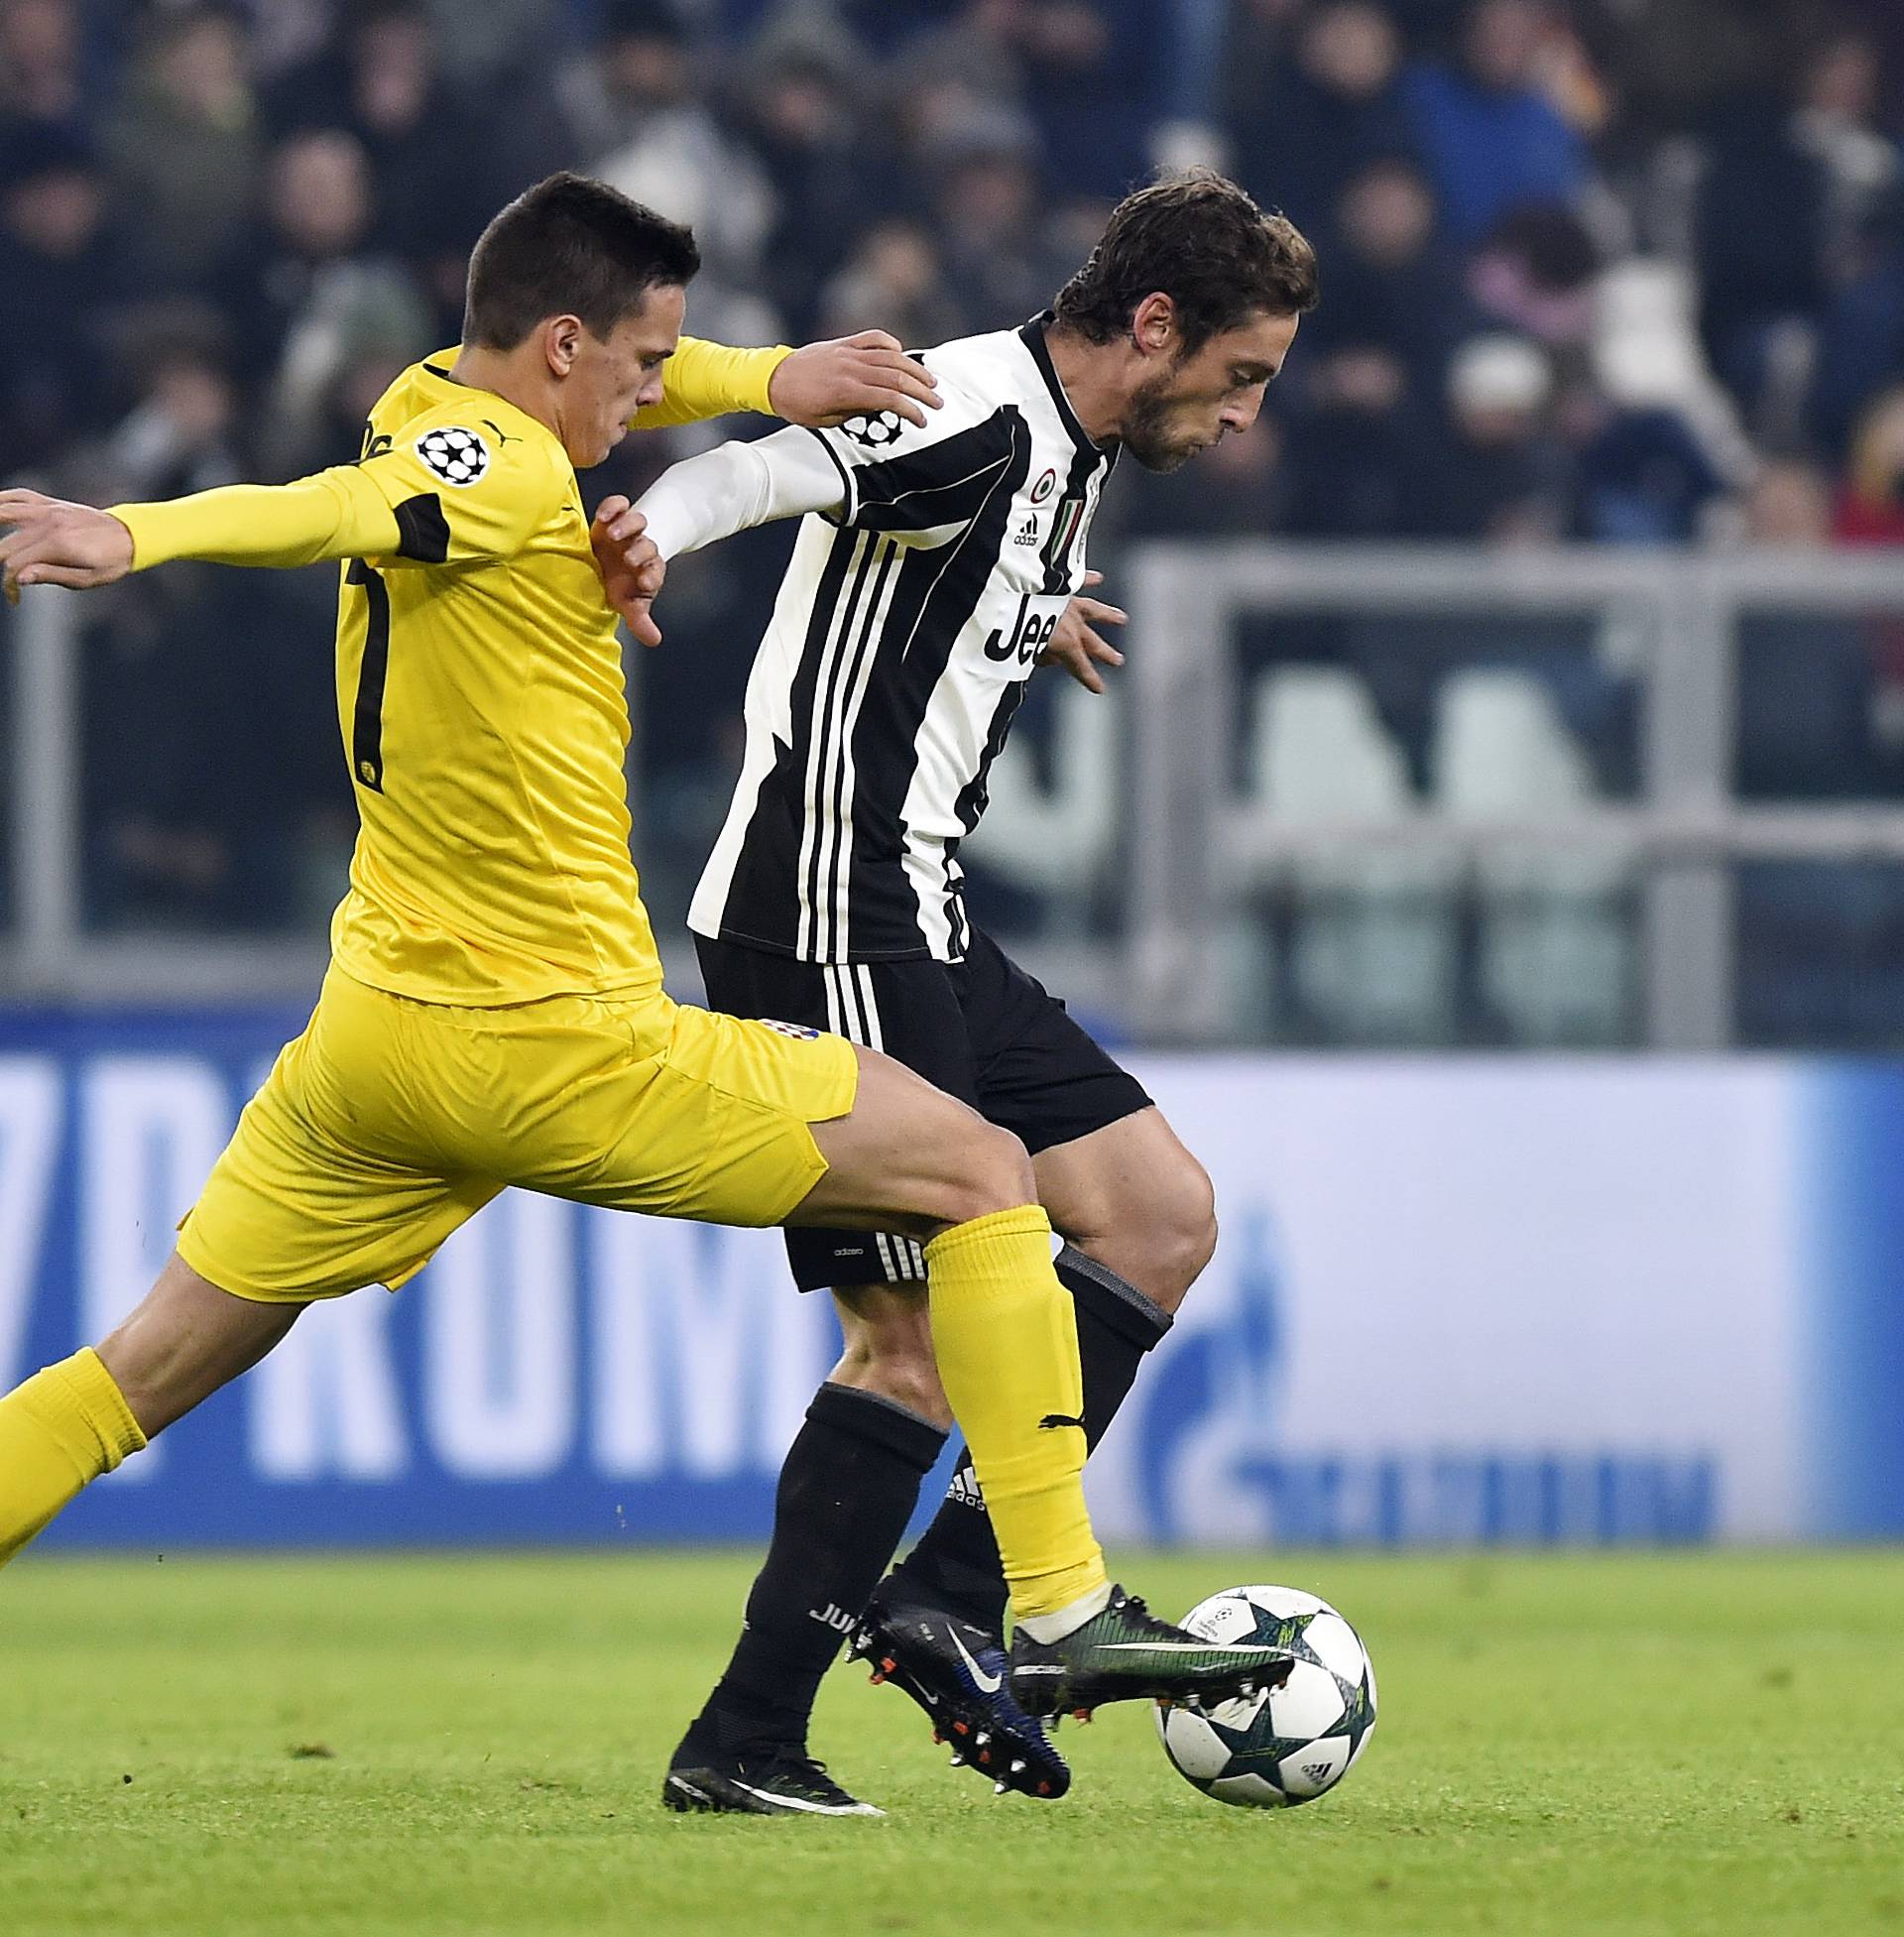 Dinamo Zagreb's Mario Situm in action with Juventus' Claudio Marchisio